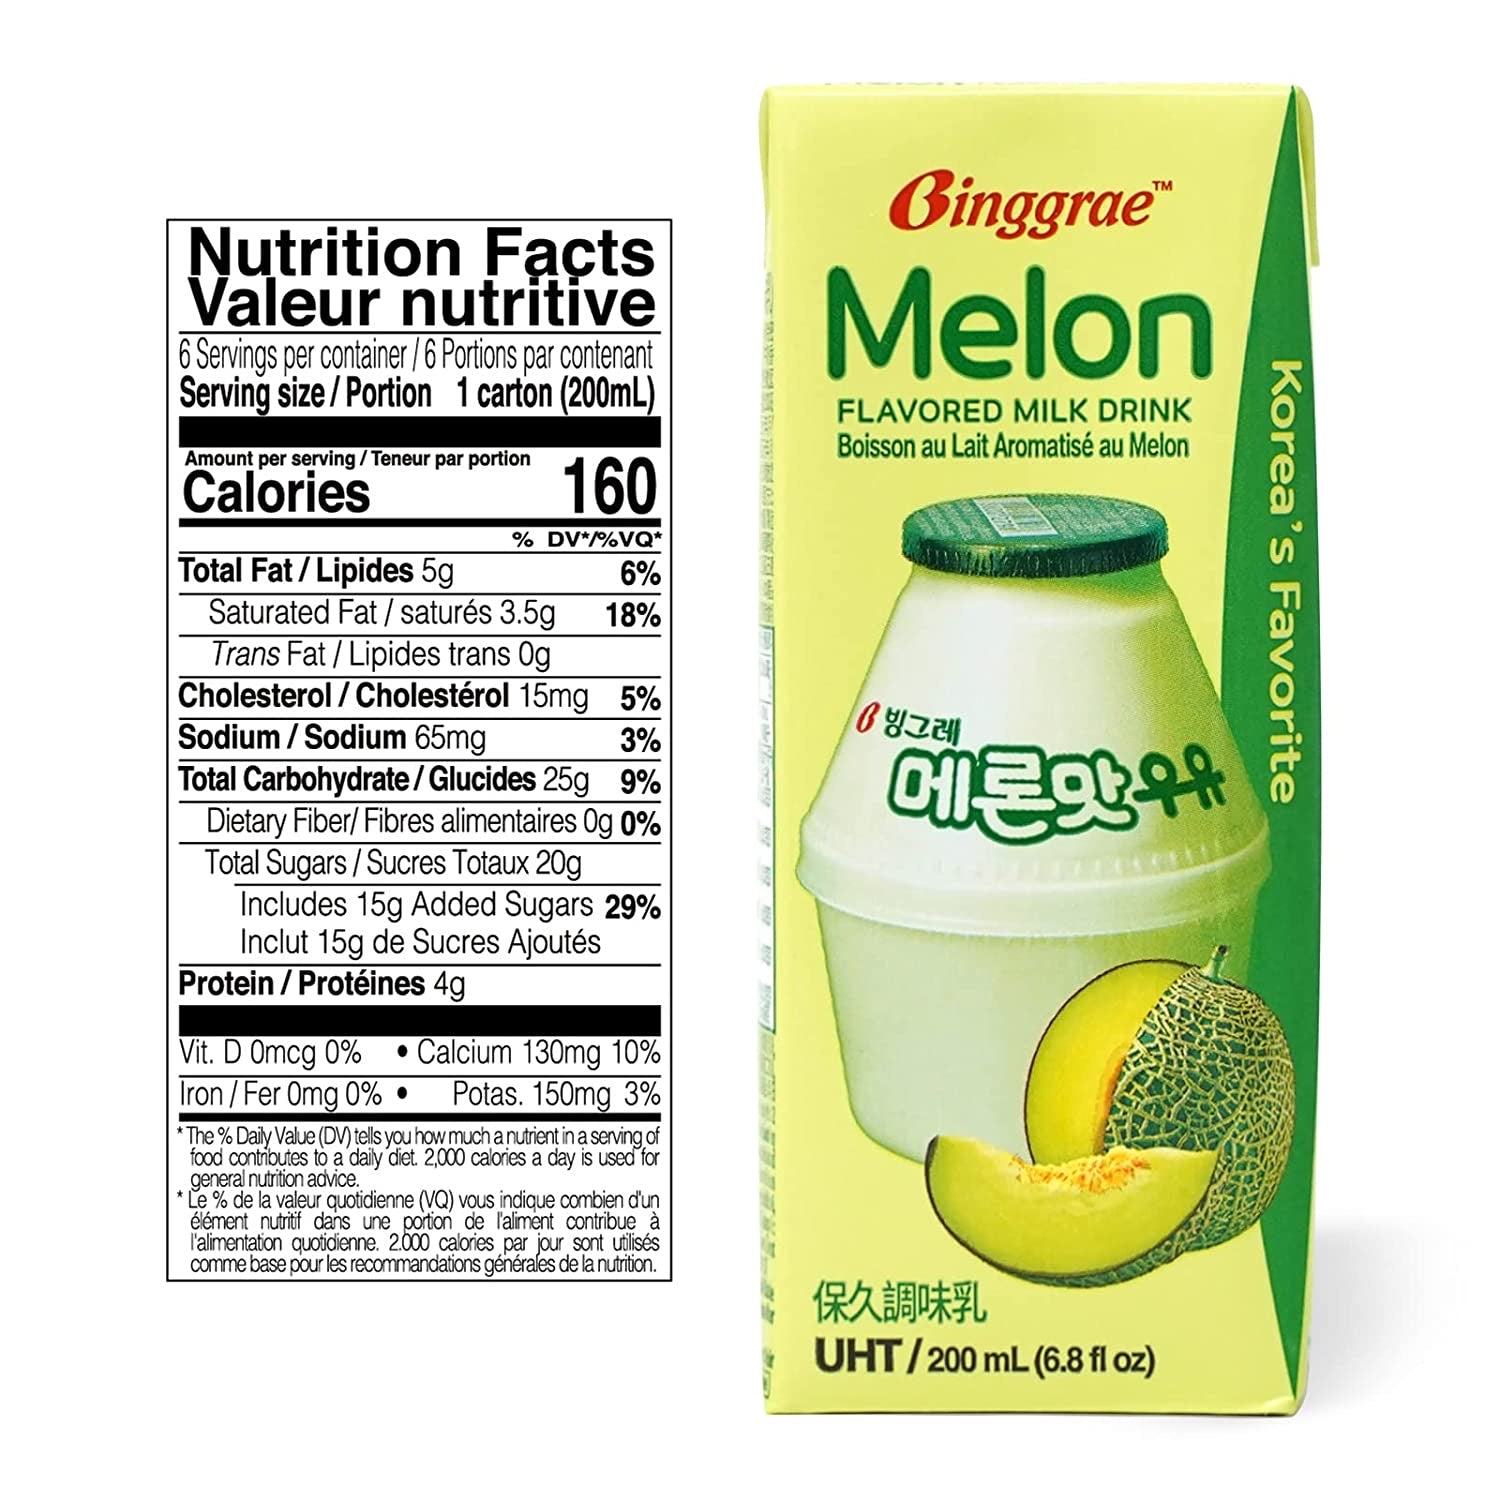 Binggrae Melon Flavored Milk - 6 Pack